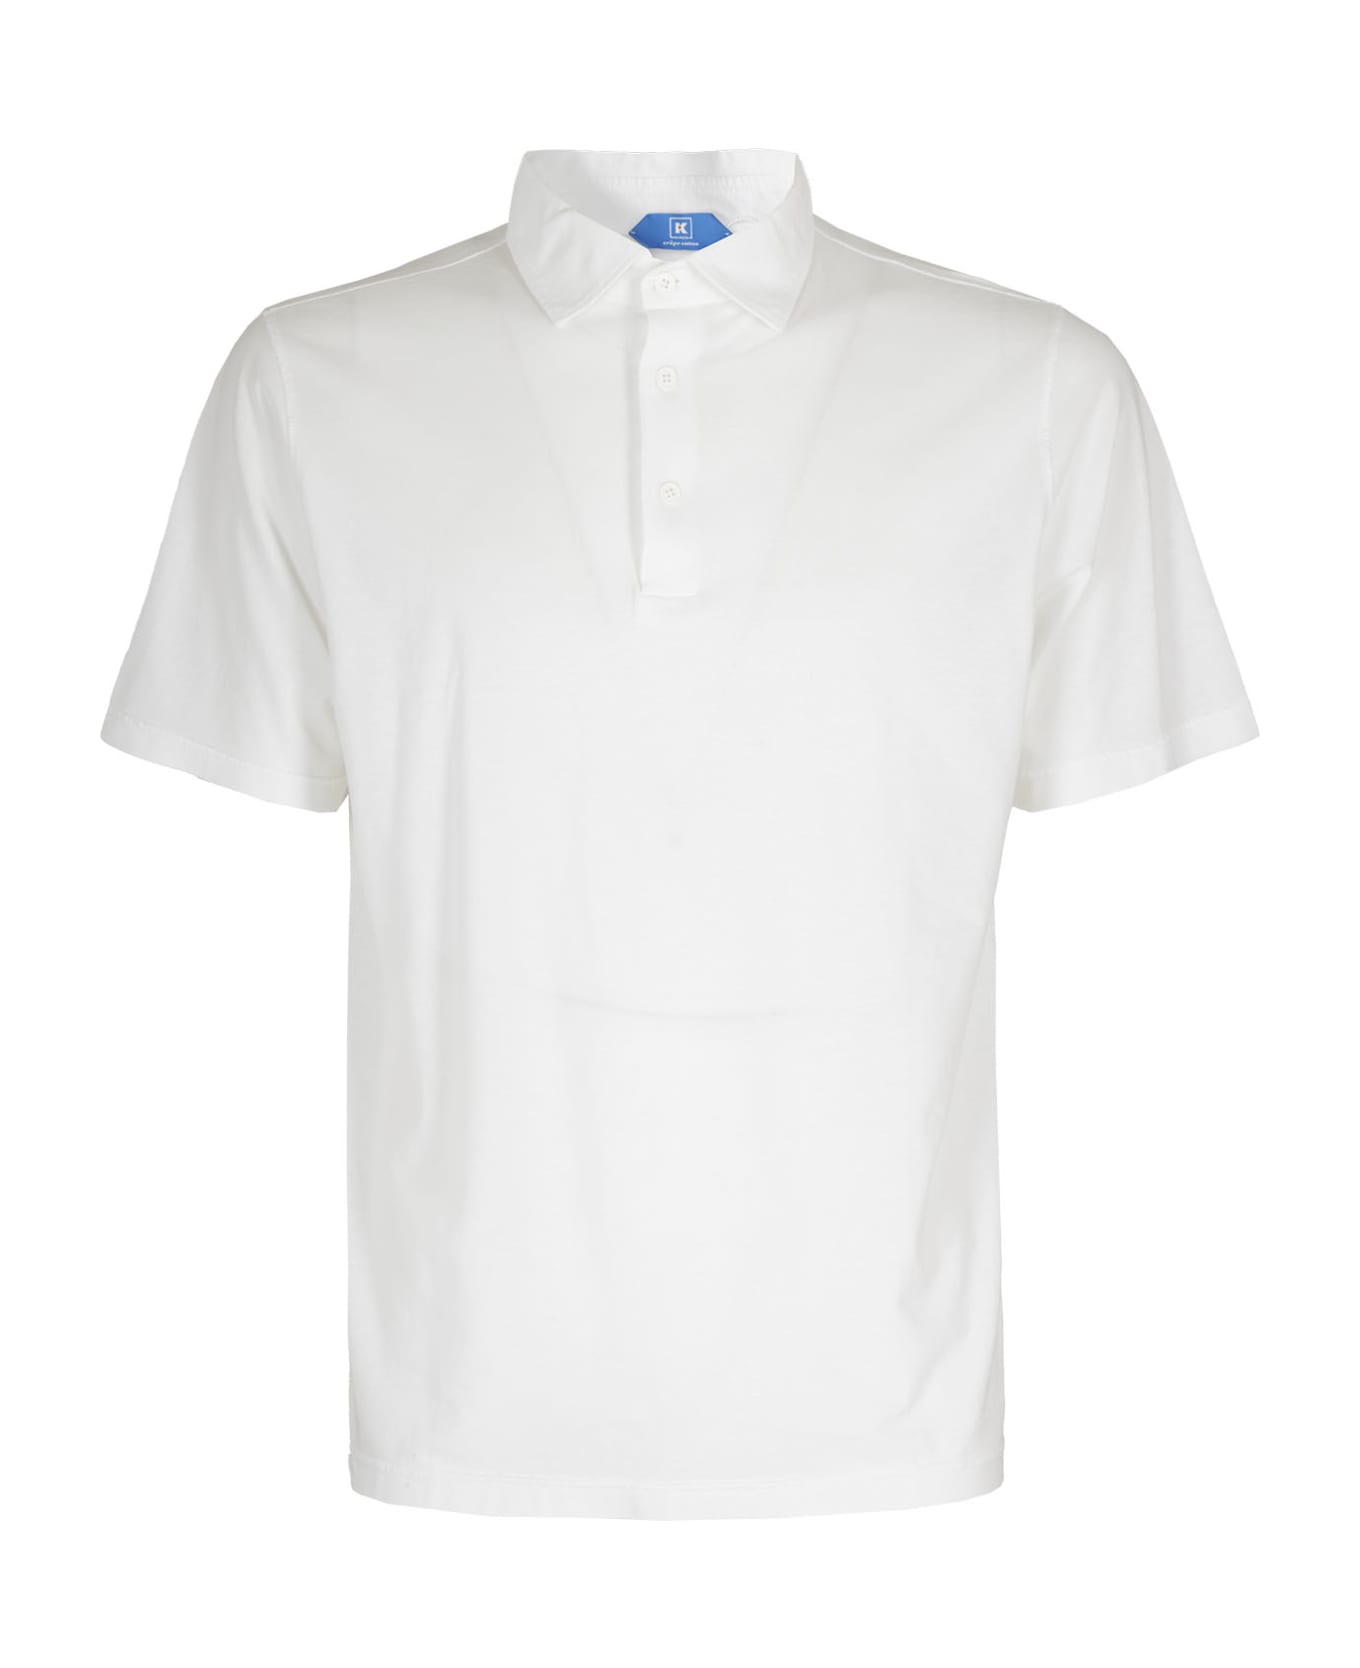 Kired M.corta Jersey Crepe` - Bianco ポロシャツ